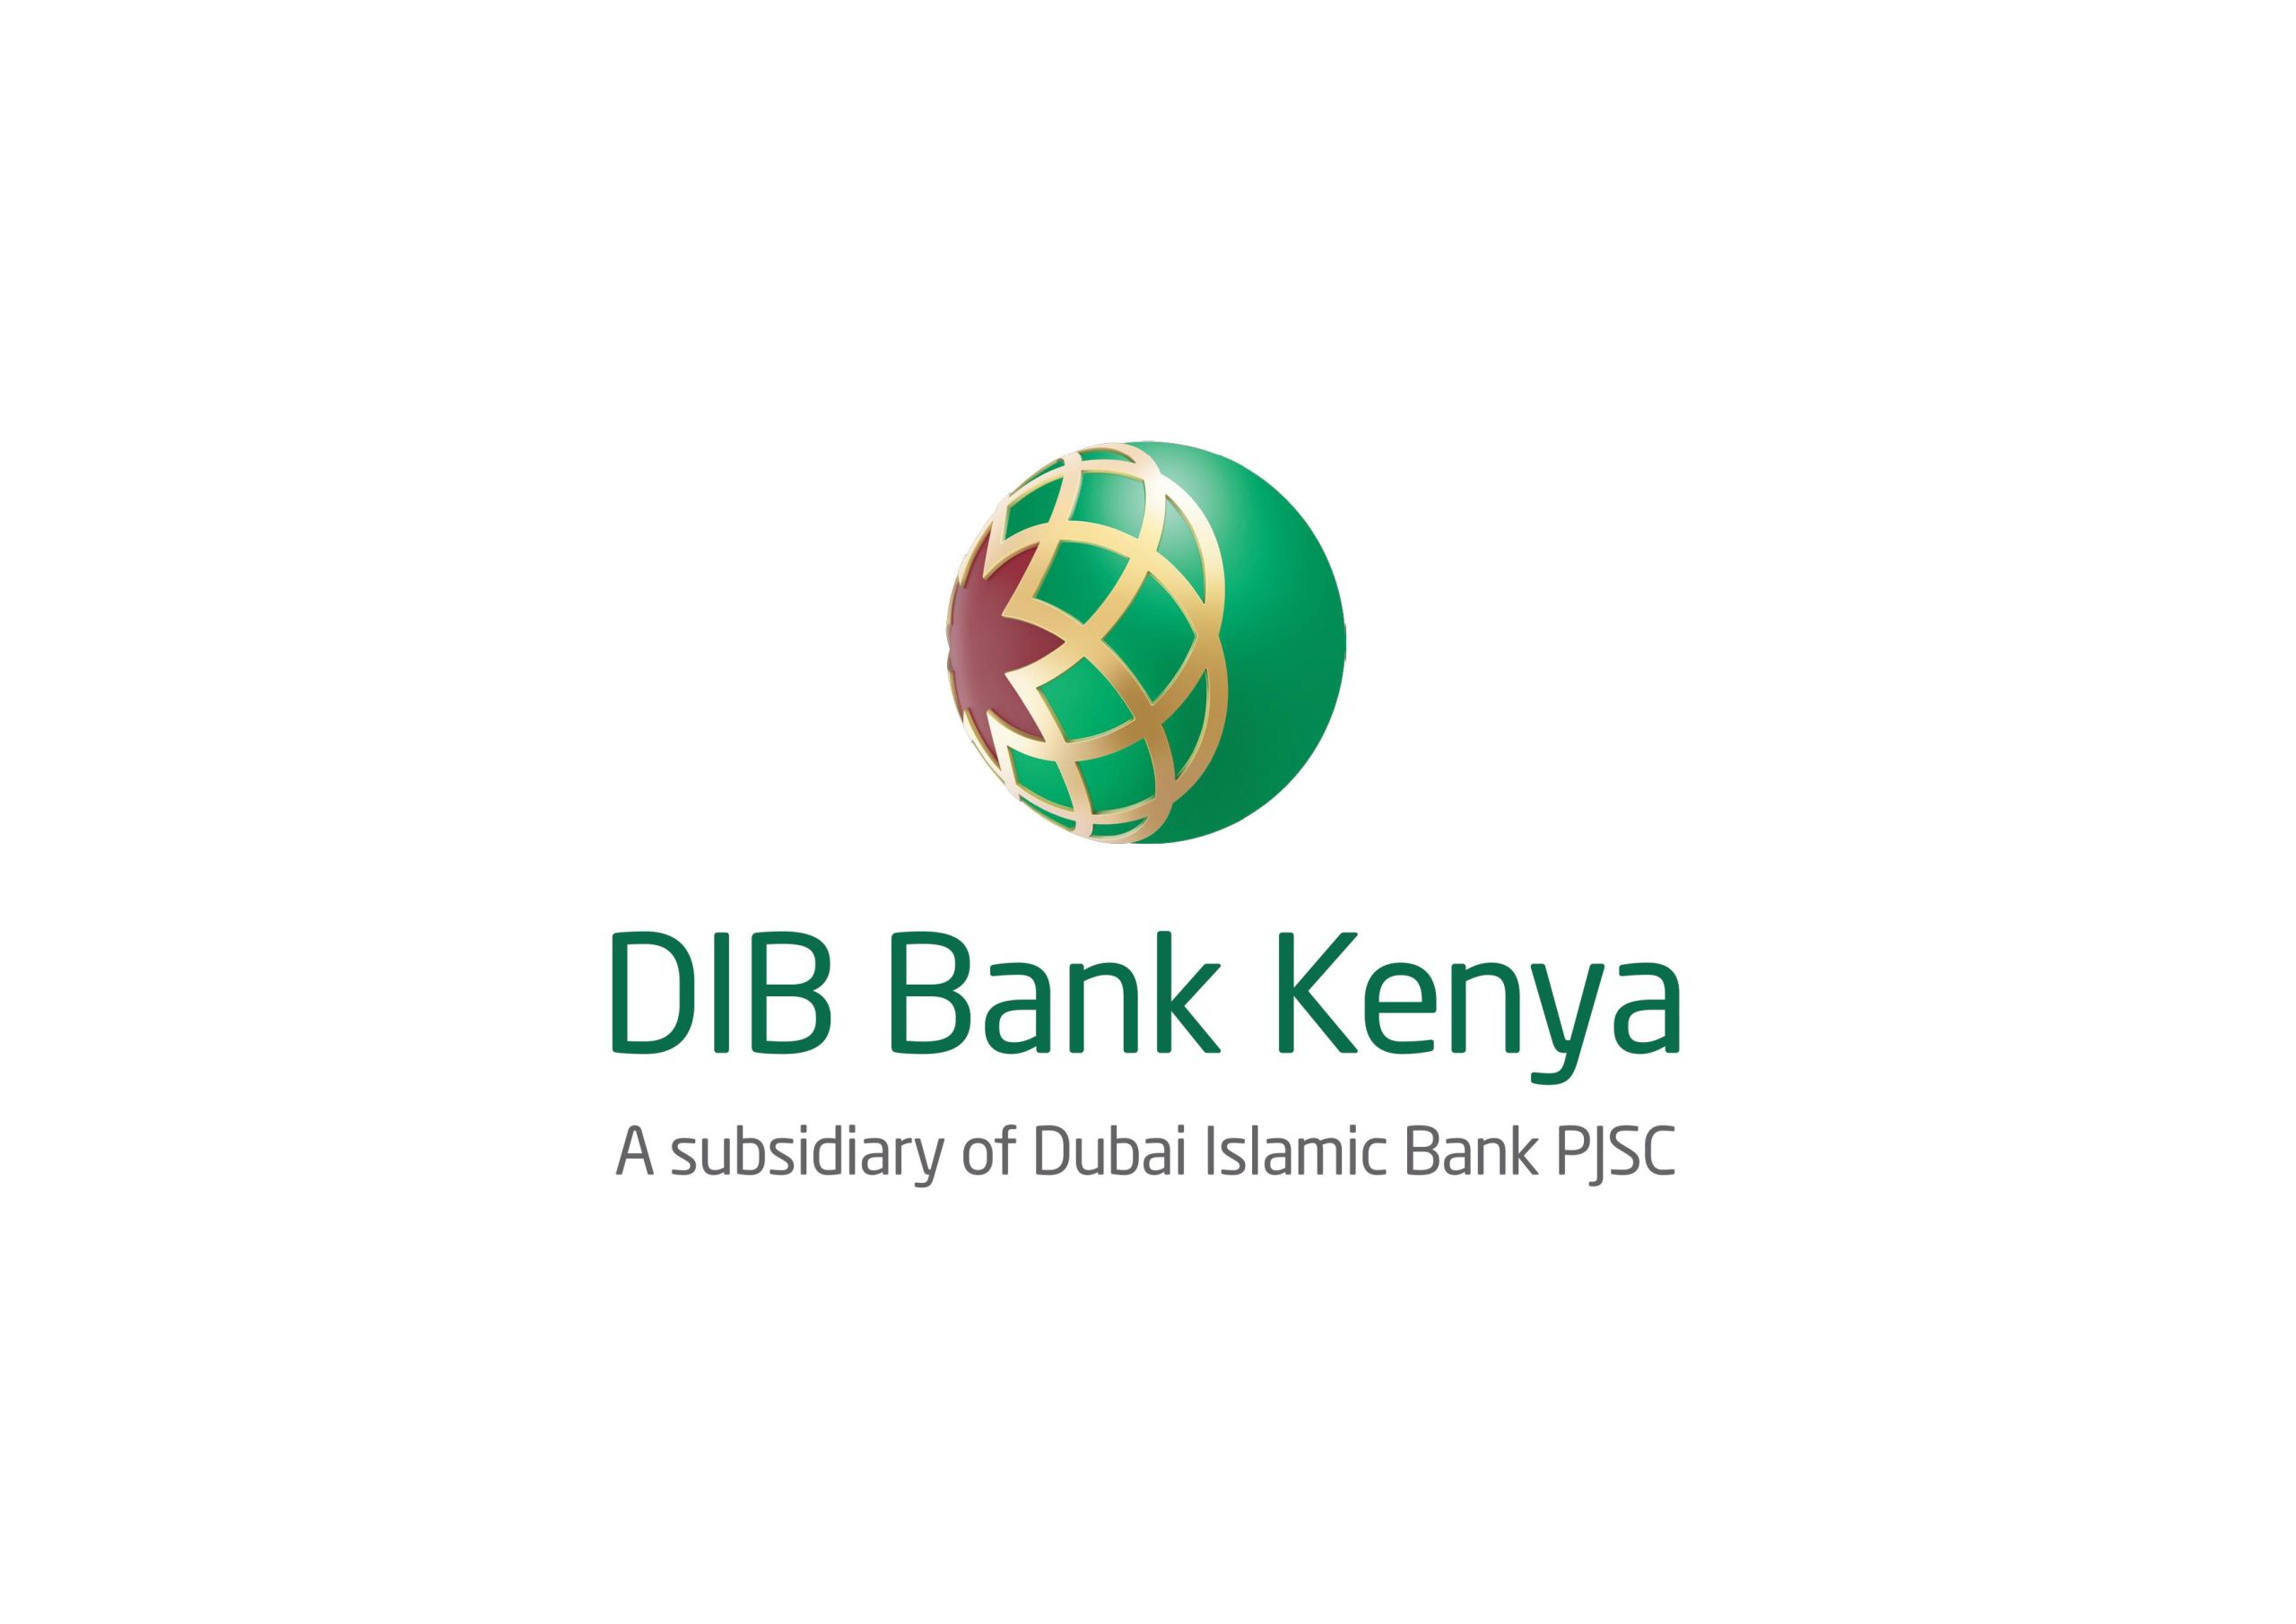 DIB BANK